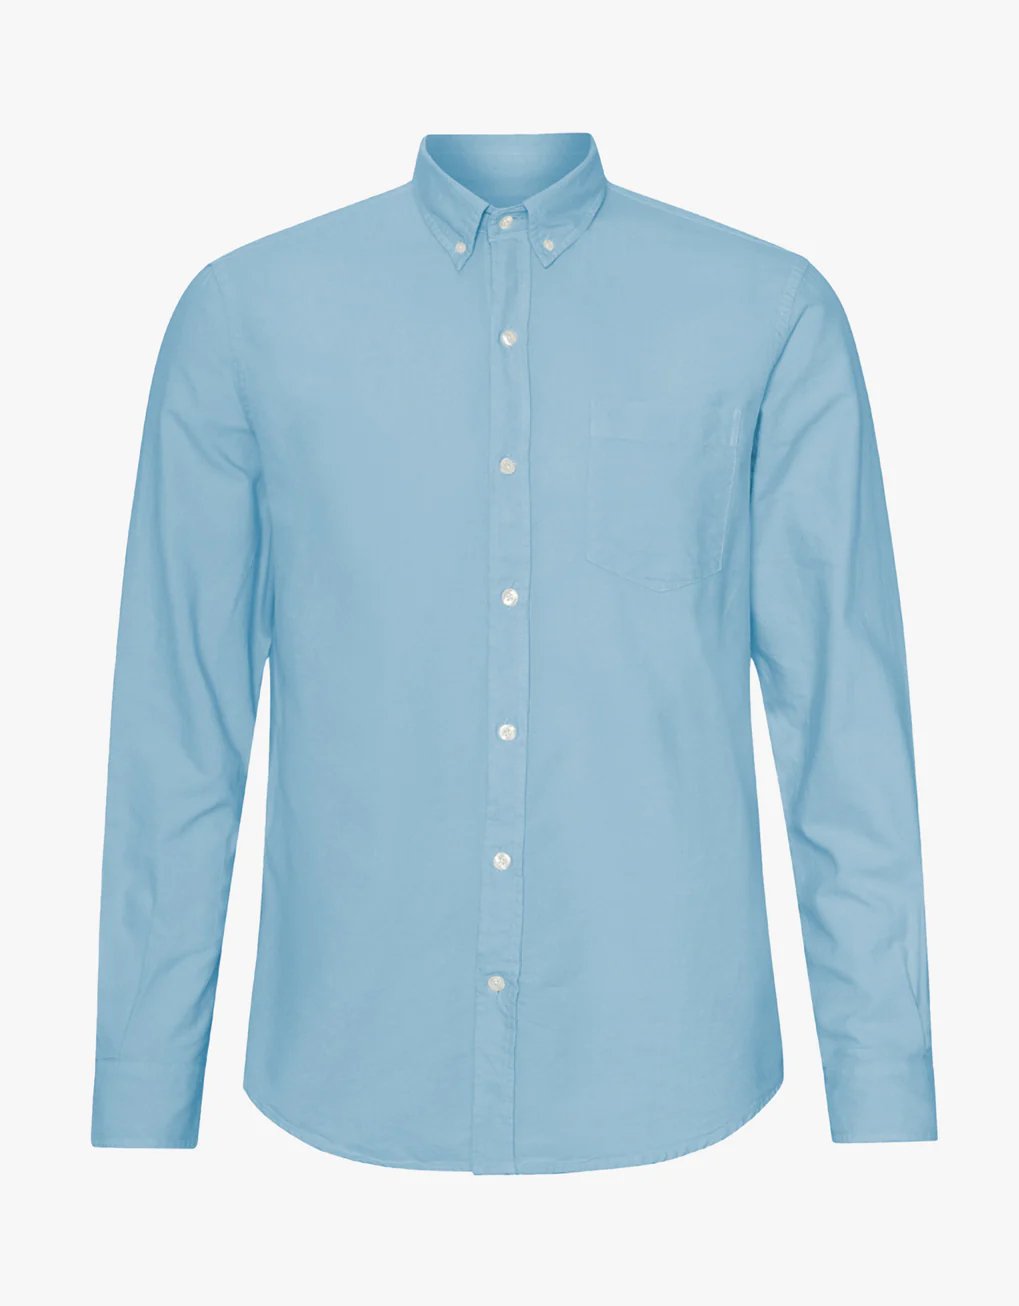 Organic Button Down Shirt - Colorful Standard - Danali - CS4002-SeasideBlue-S